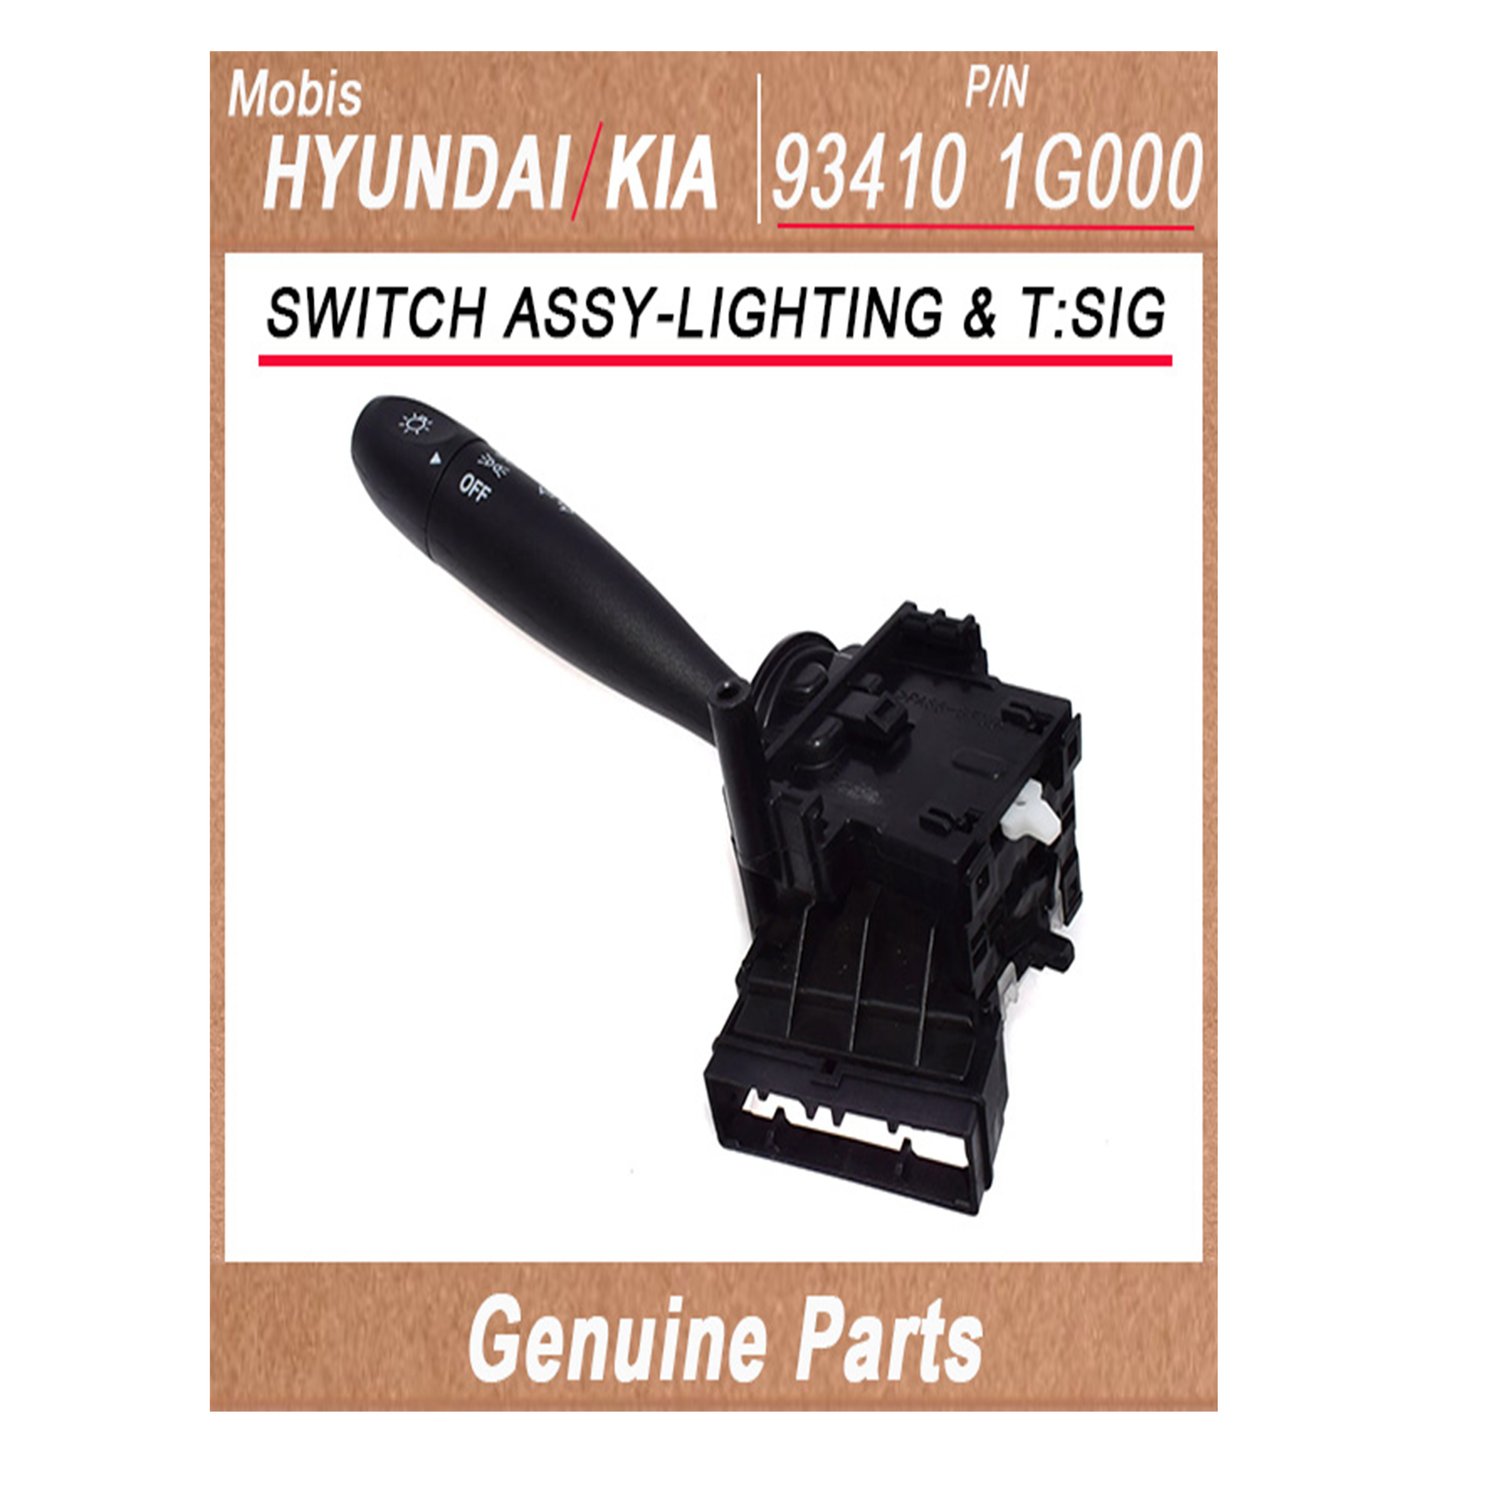 934101G000 _ SWITCH ASSY_LIGHTING _ T_SIG _ Genuine Korean Automotive Spare Parts _ Hyundai Kia _Mob